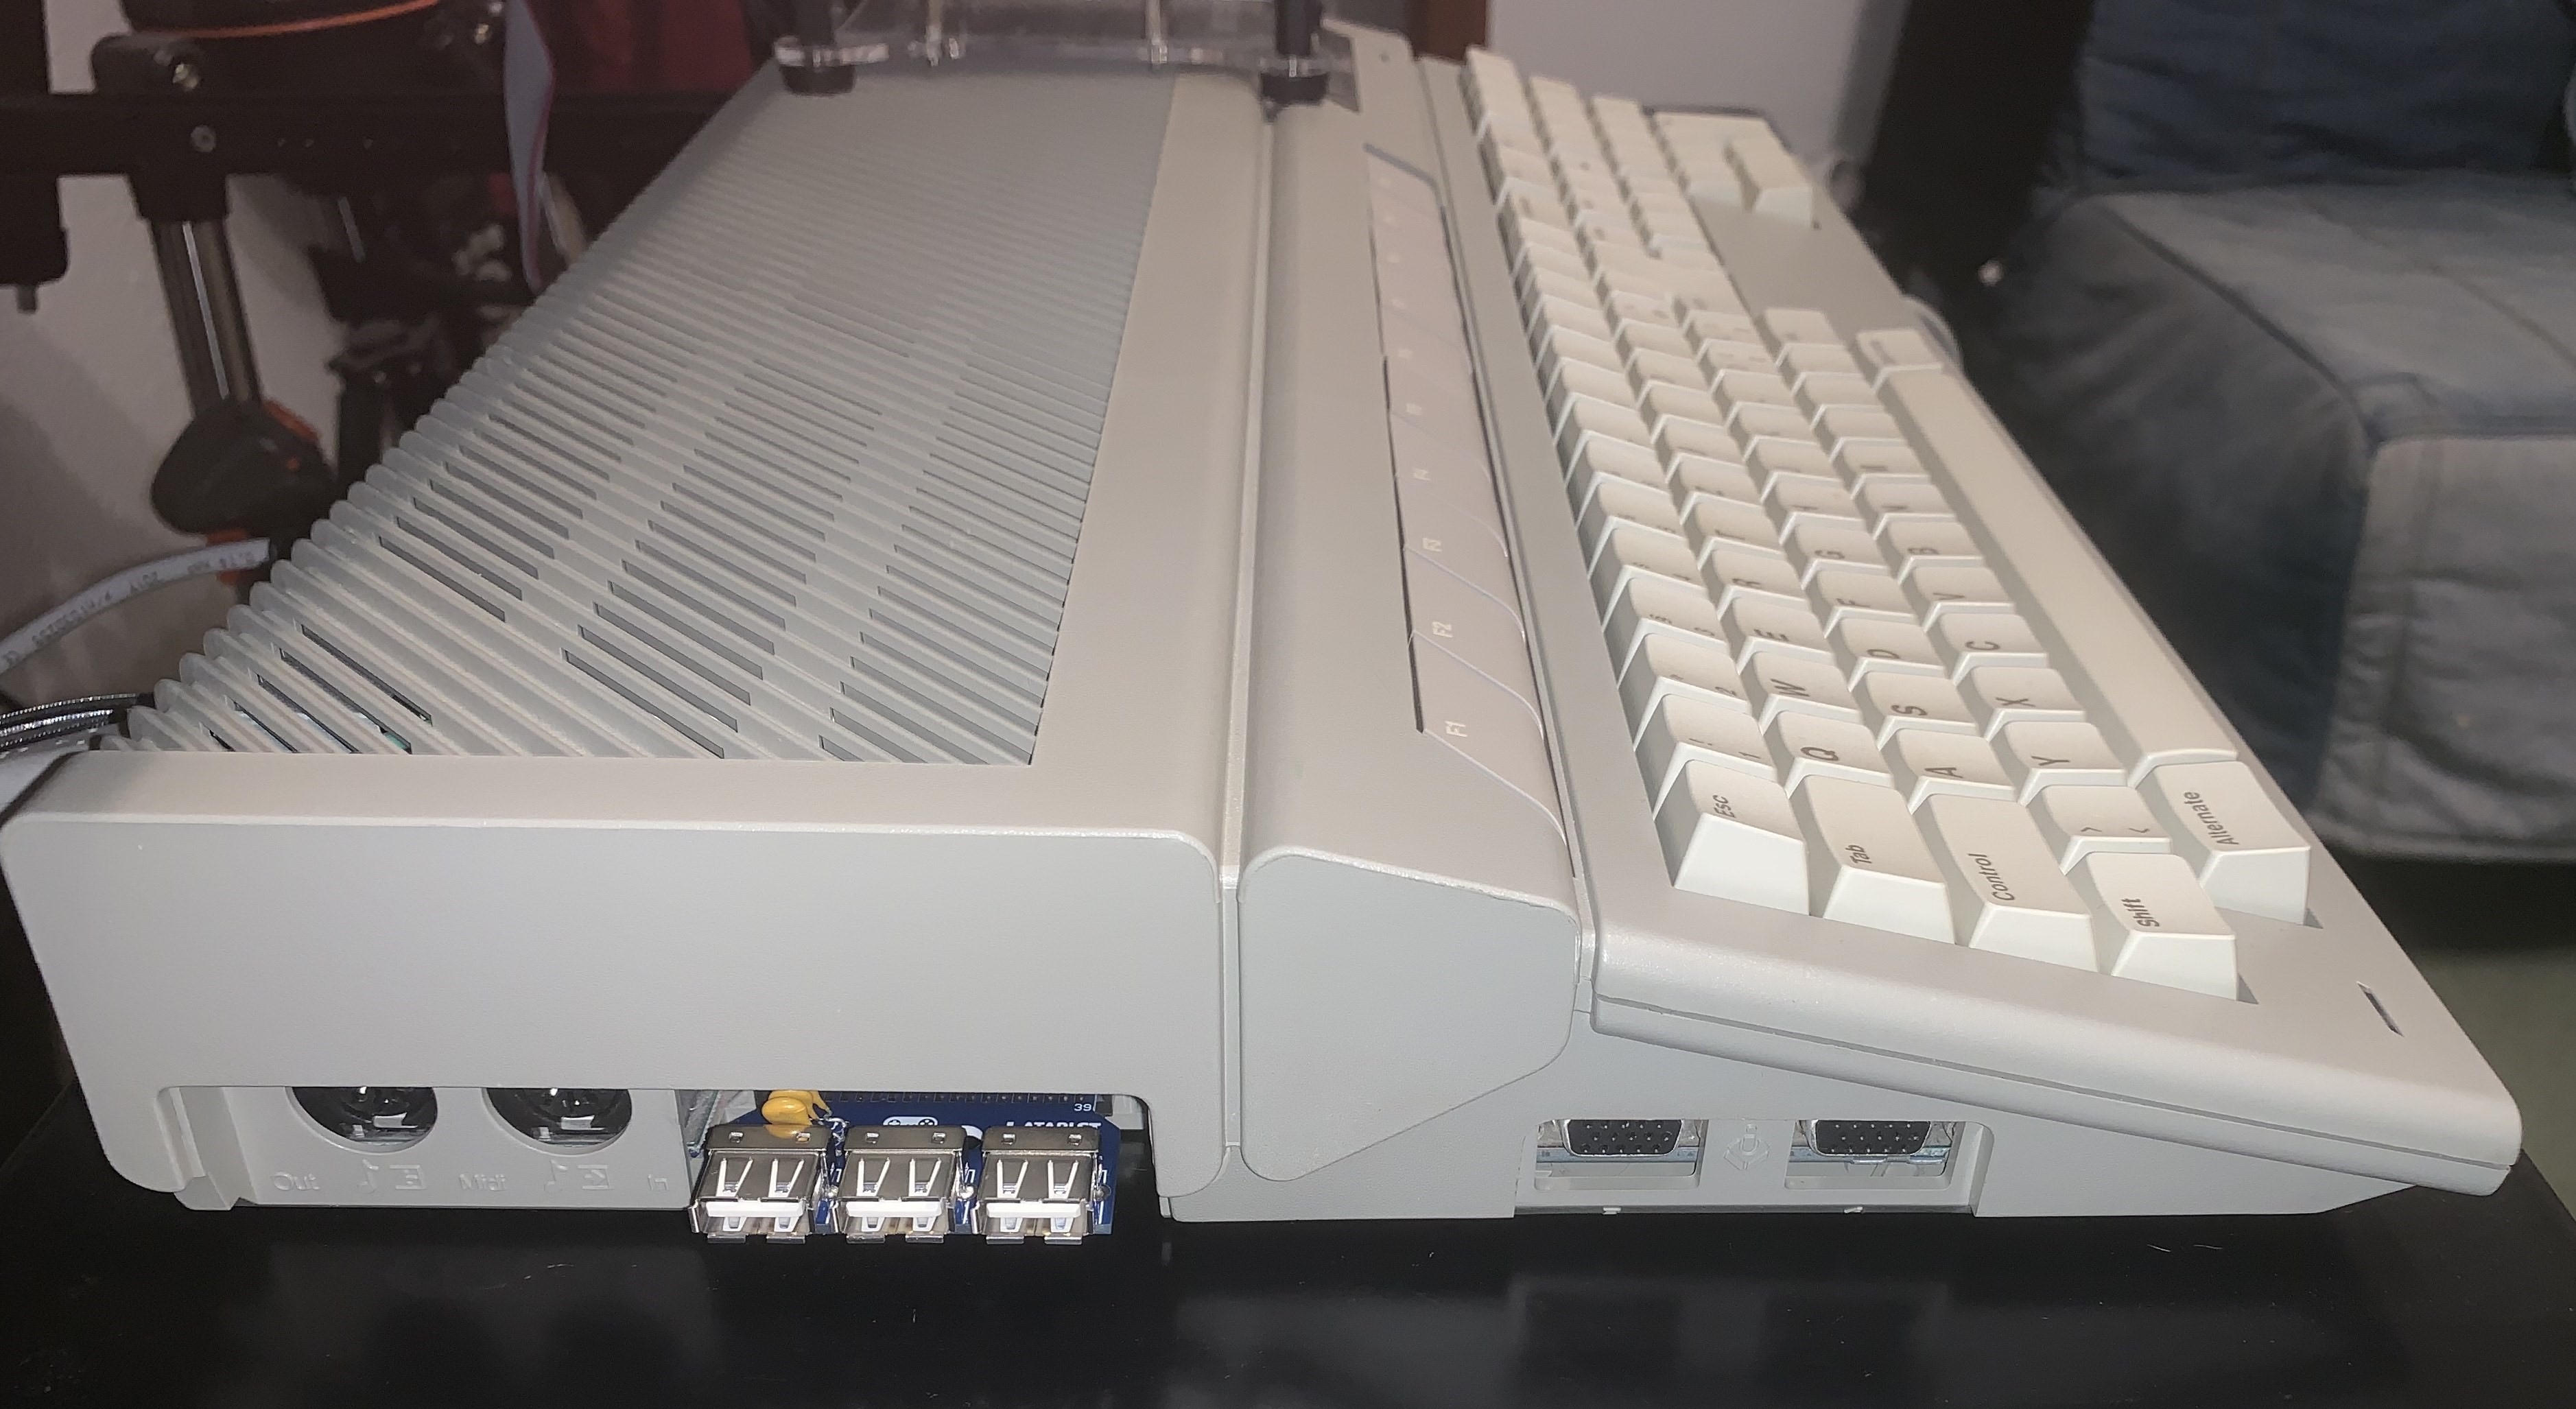  USB powered Atari ST. 